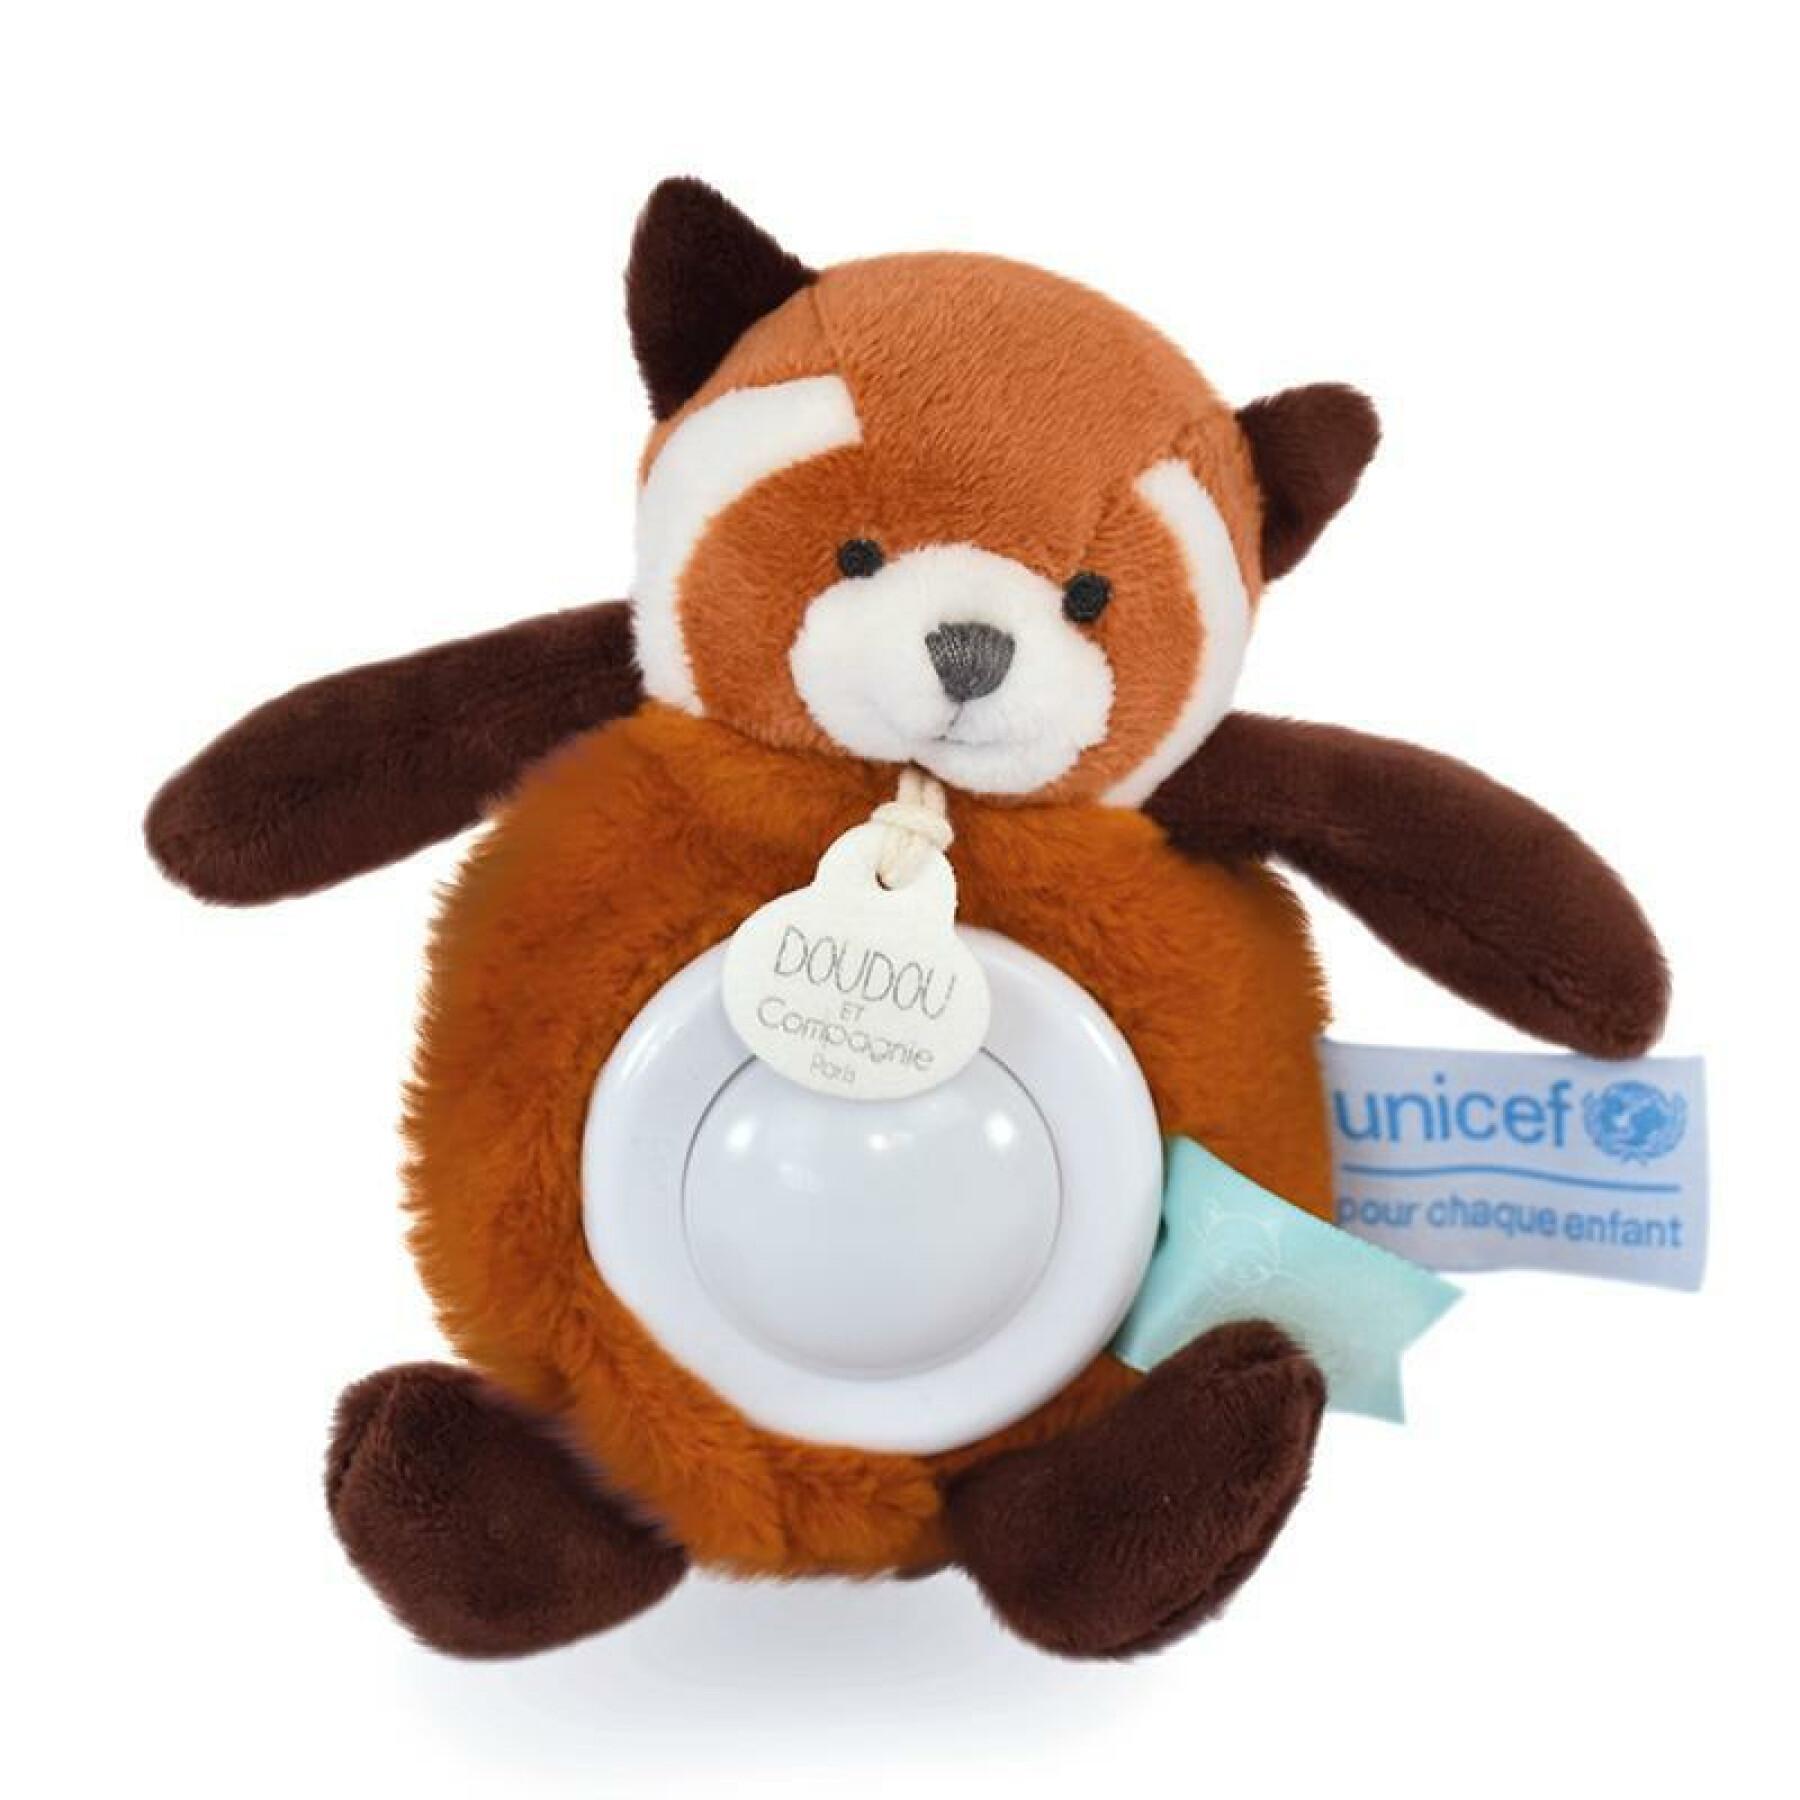 Nightlight Doudou & compagnie Unicef - Panda